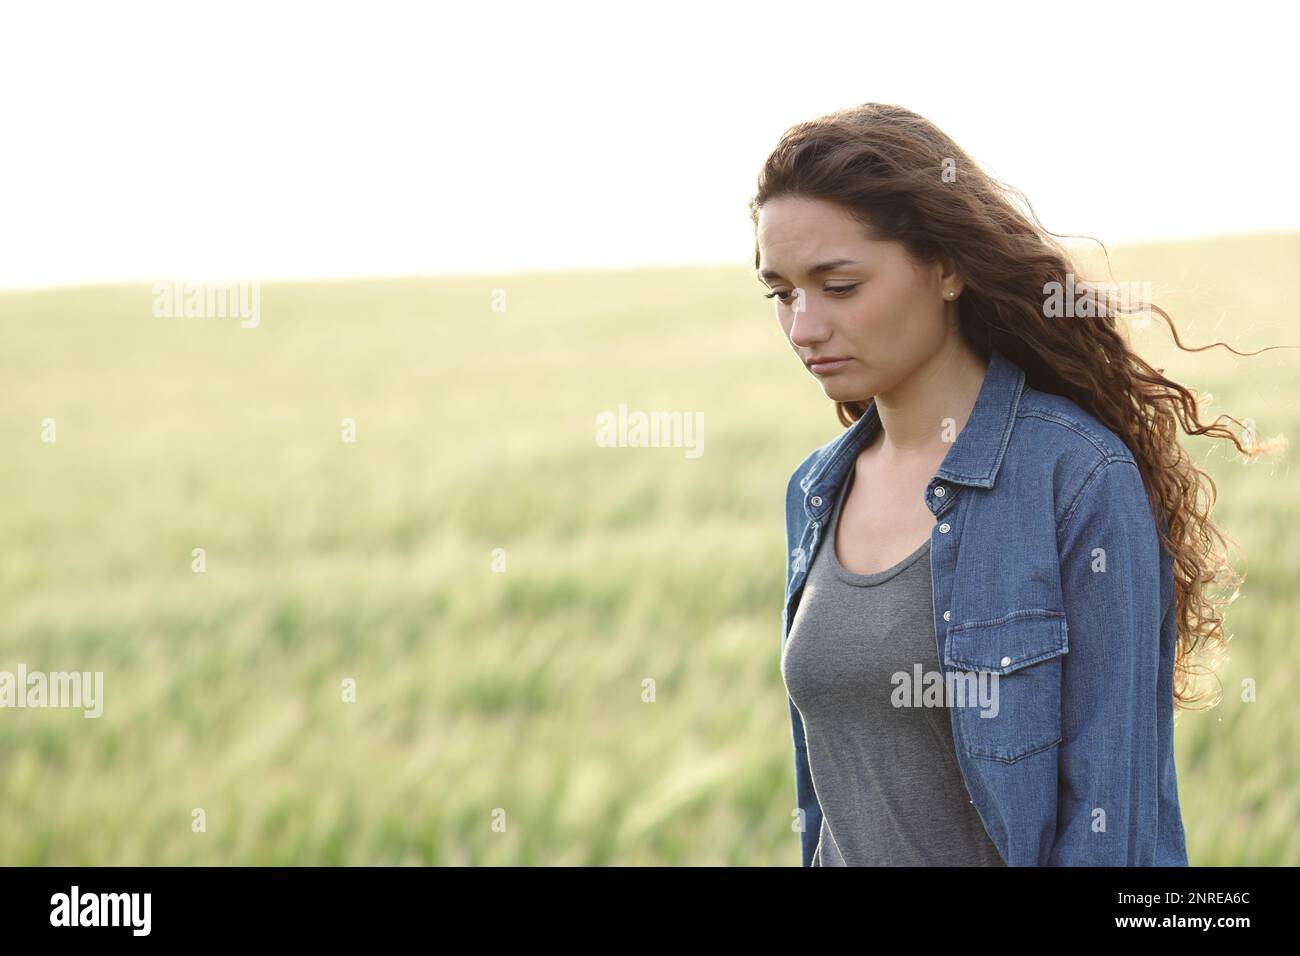 Sad woman walking alone in a wheat field Stock Photo